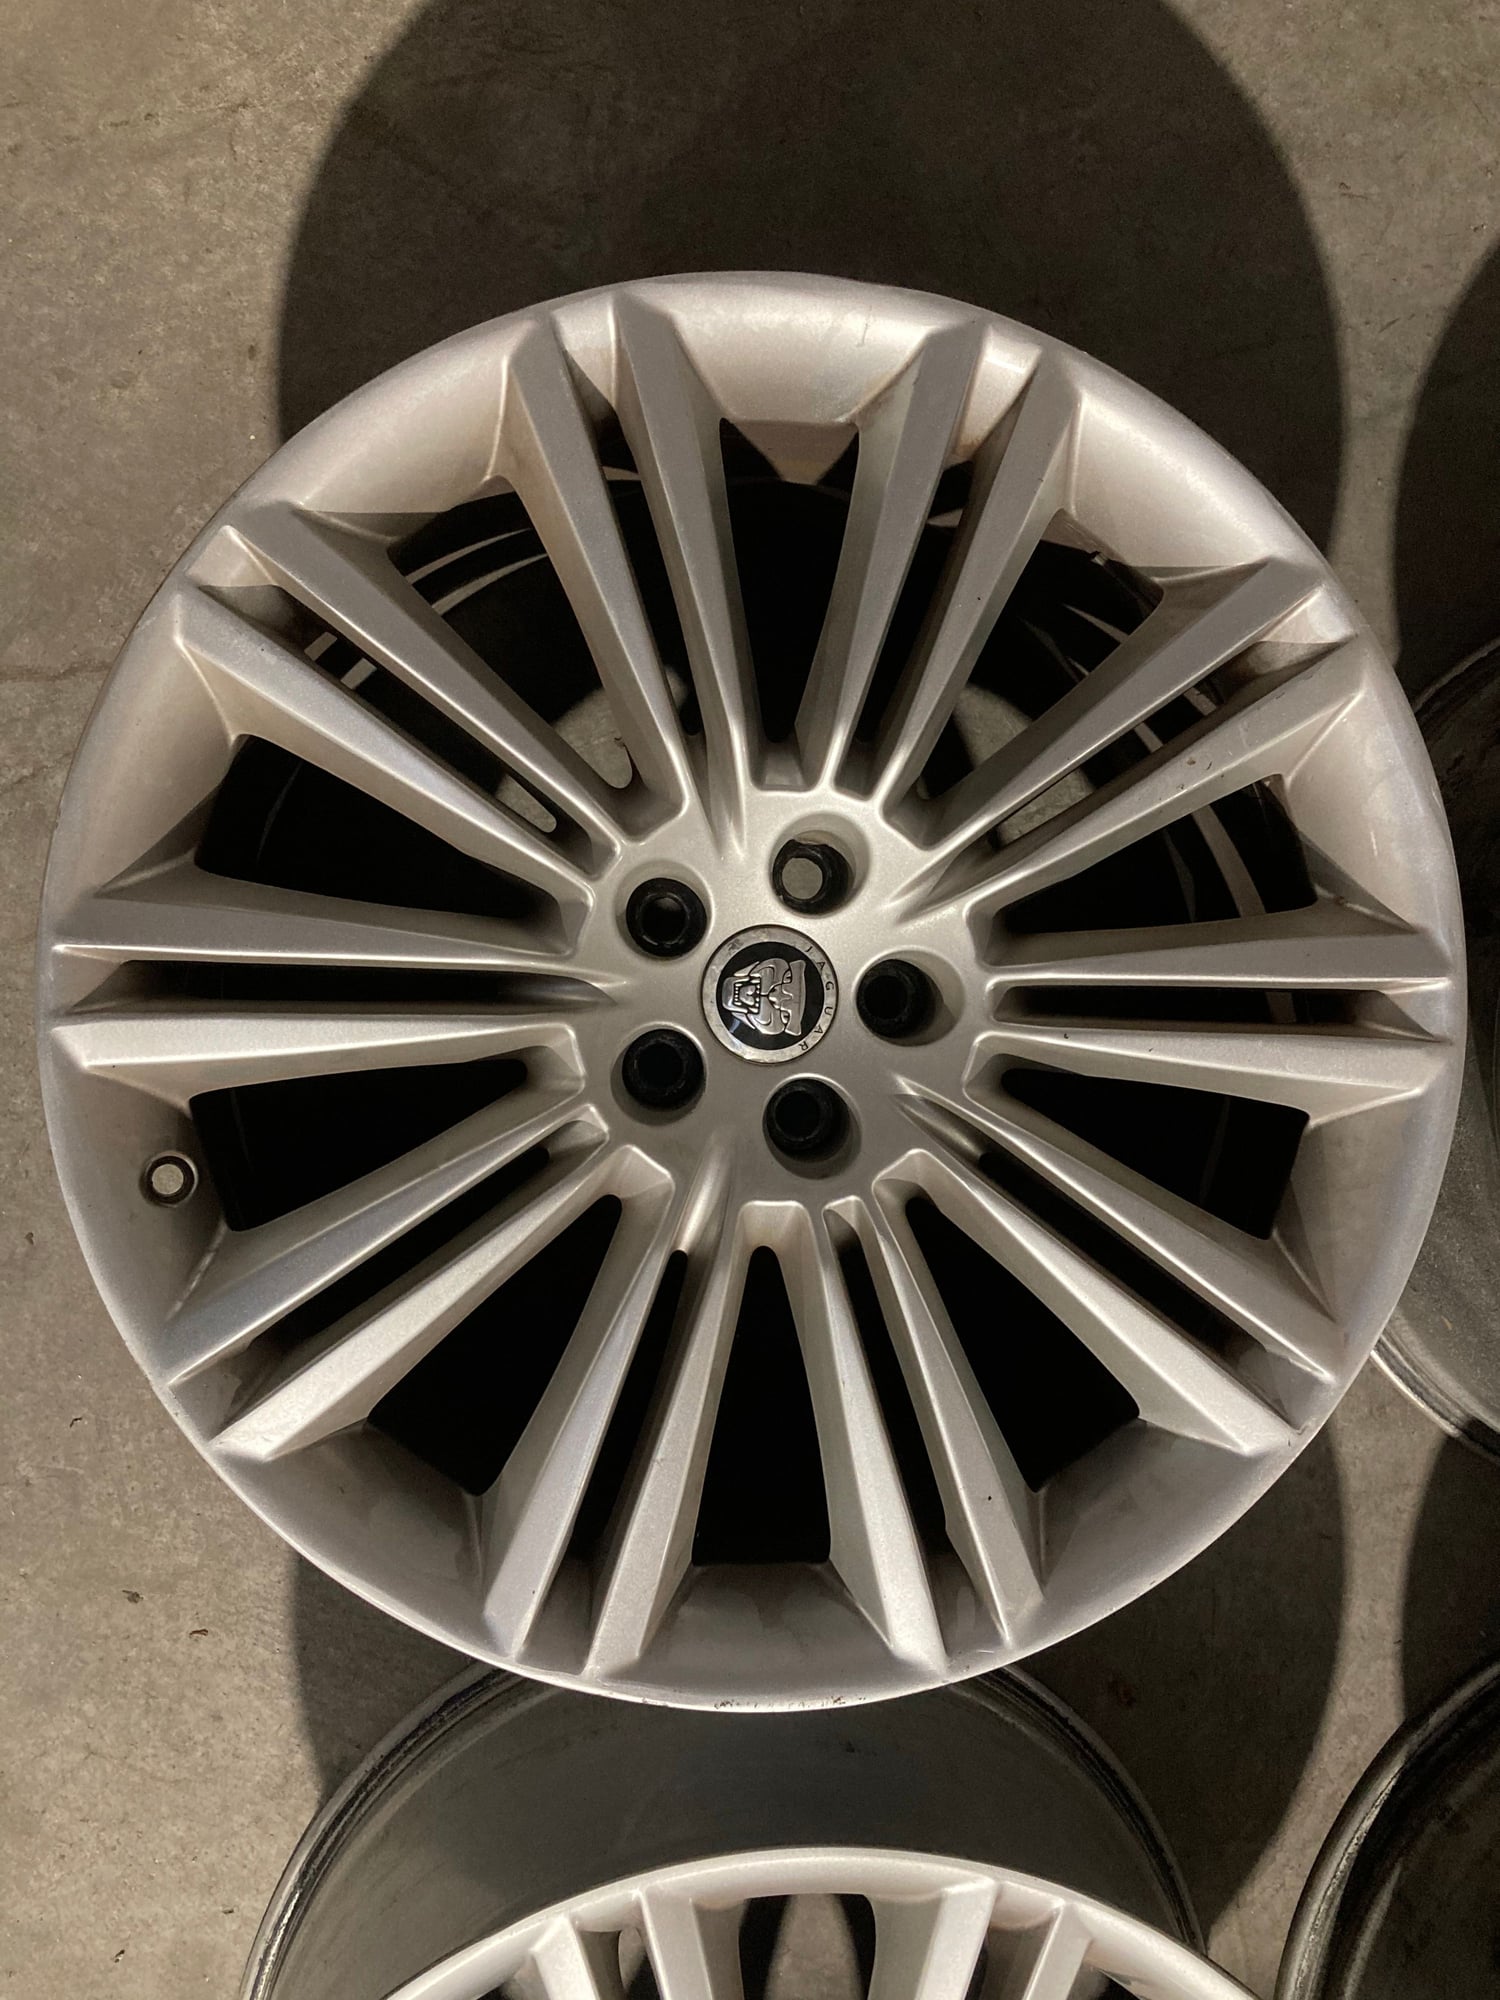 Wheels and Tires/Axles - Jaguar OEM Kasuga Wheels - Used - 2010 to 2019 Jaguar XJ - Austin, TX 78719, United States